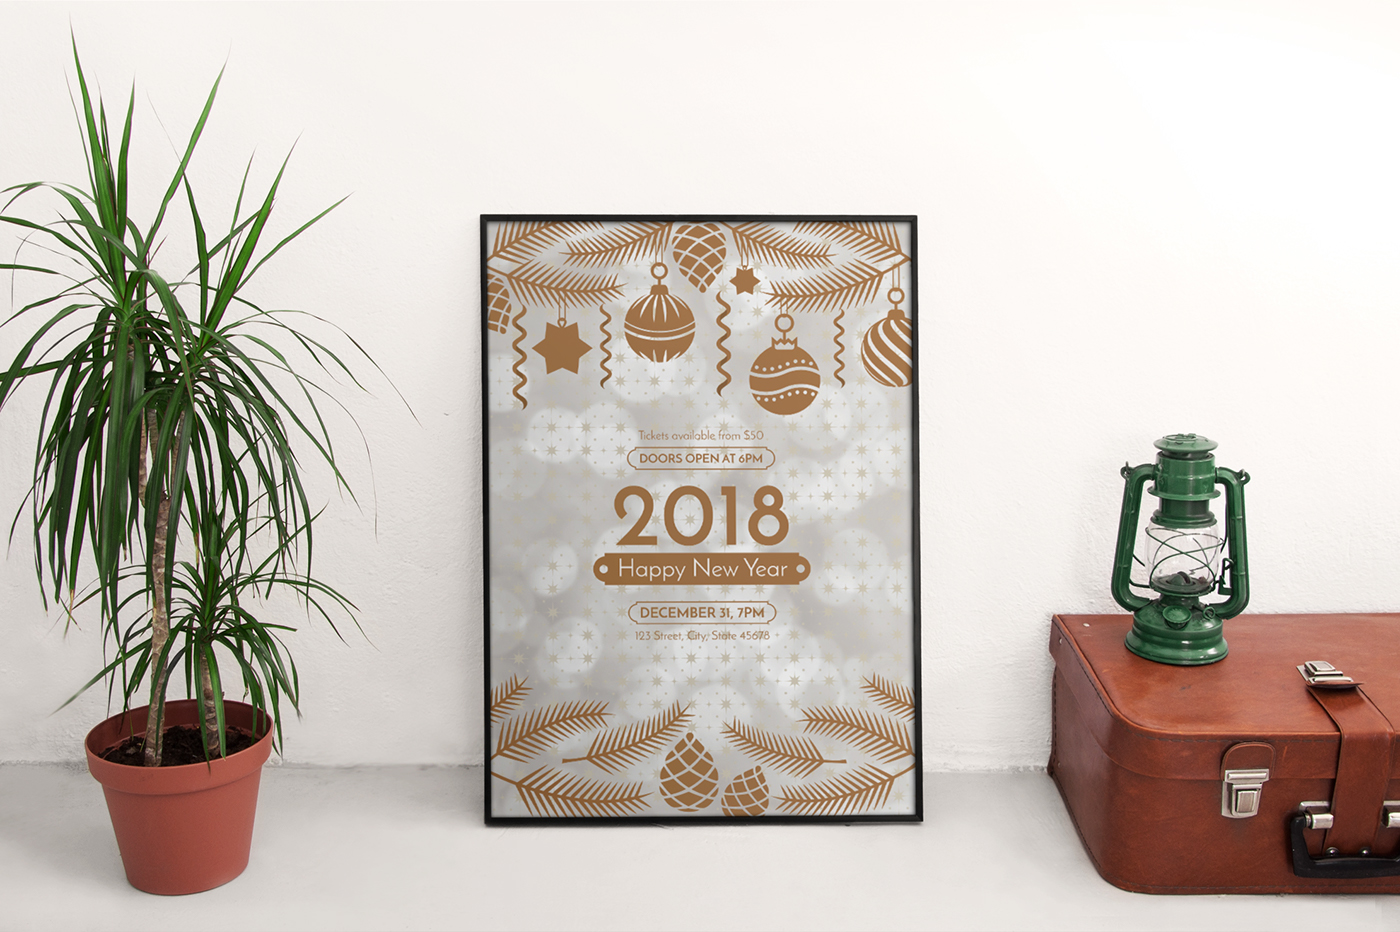 graphic design  Creative Design graphic design template bundle sale Christmas party flyer free